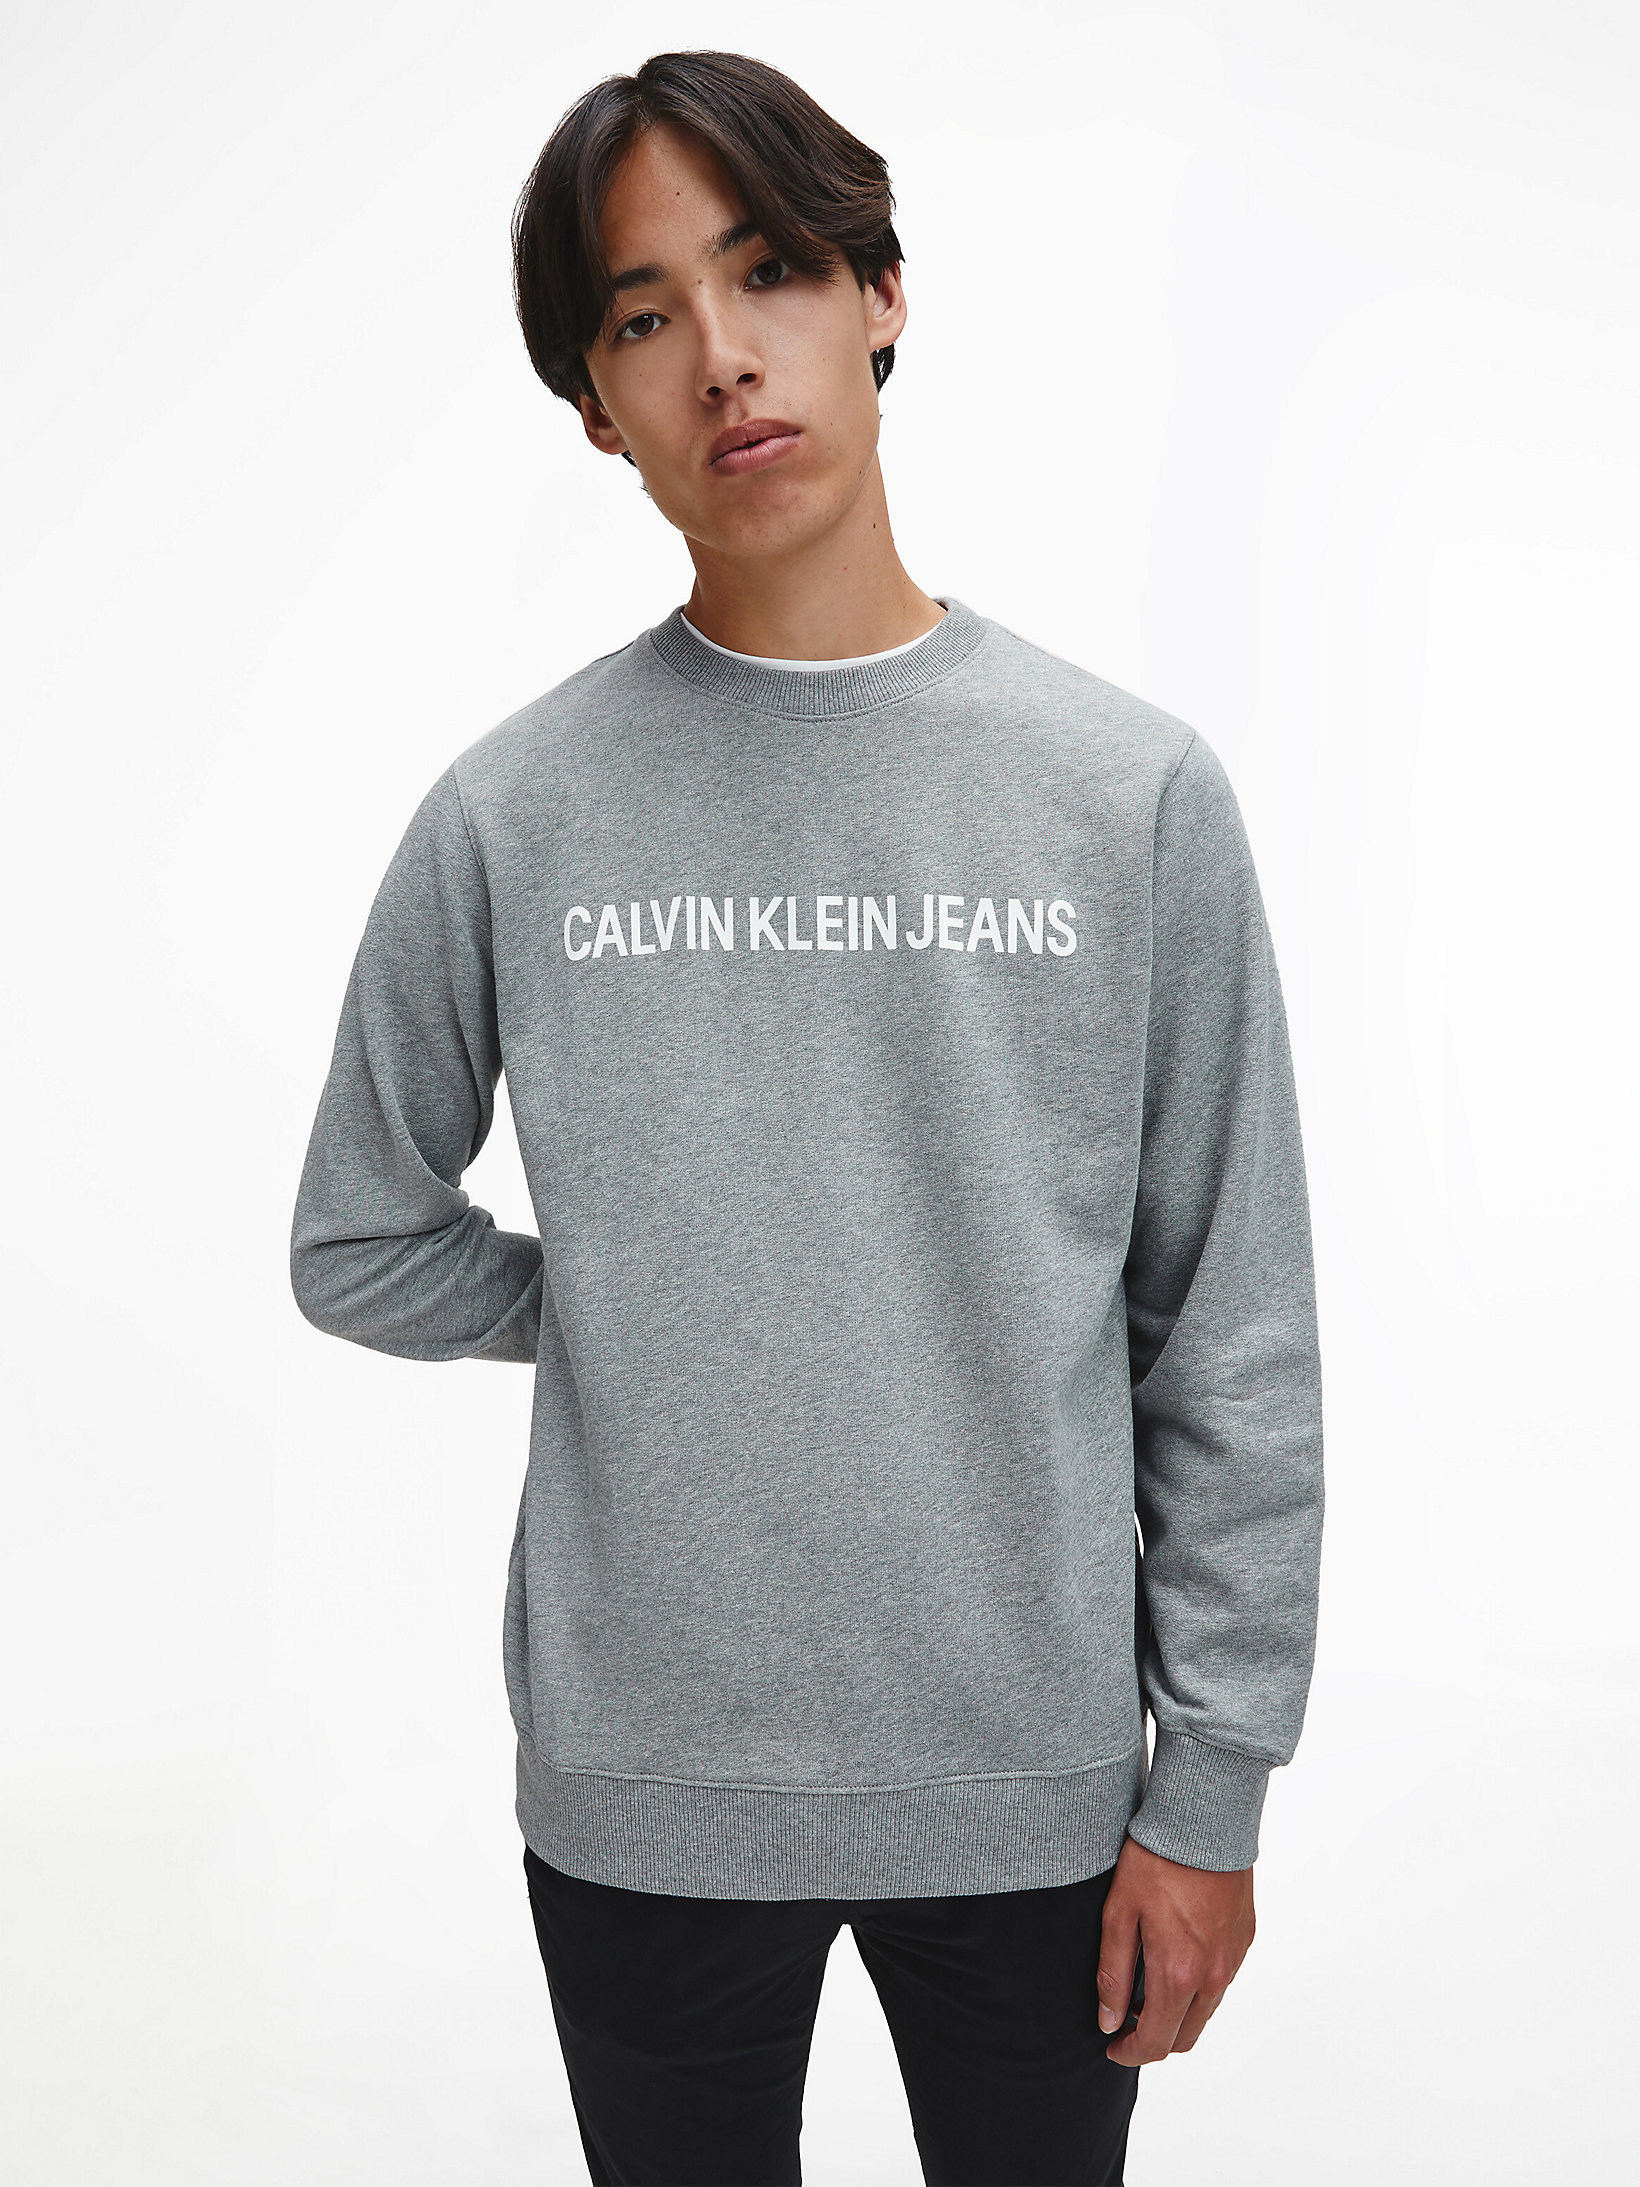 Introducir 50+ imagen calvin klein jeans logo sweatshirt